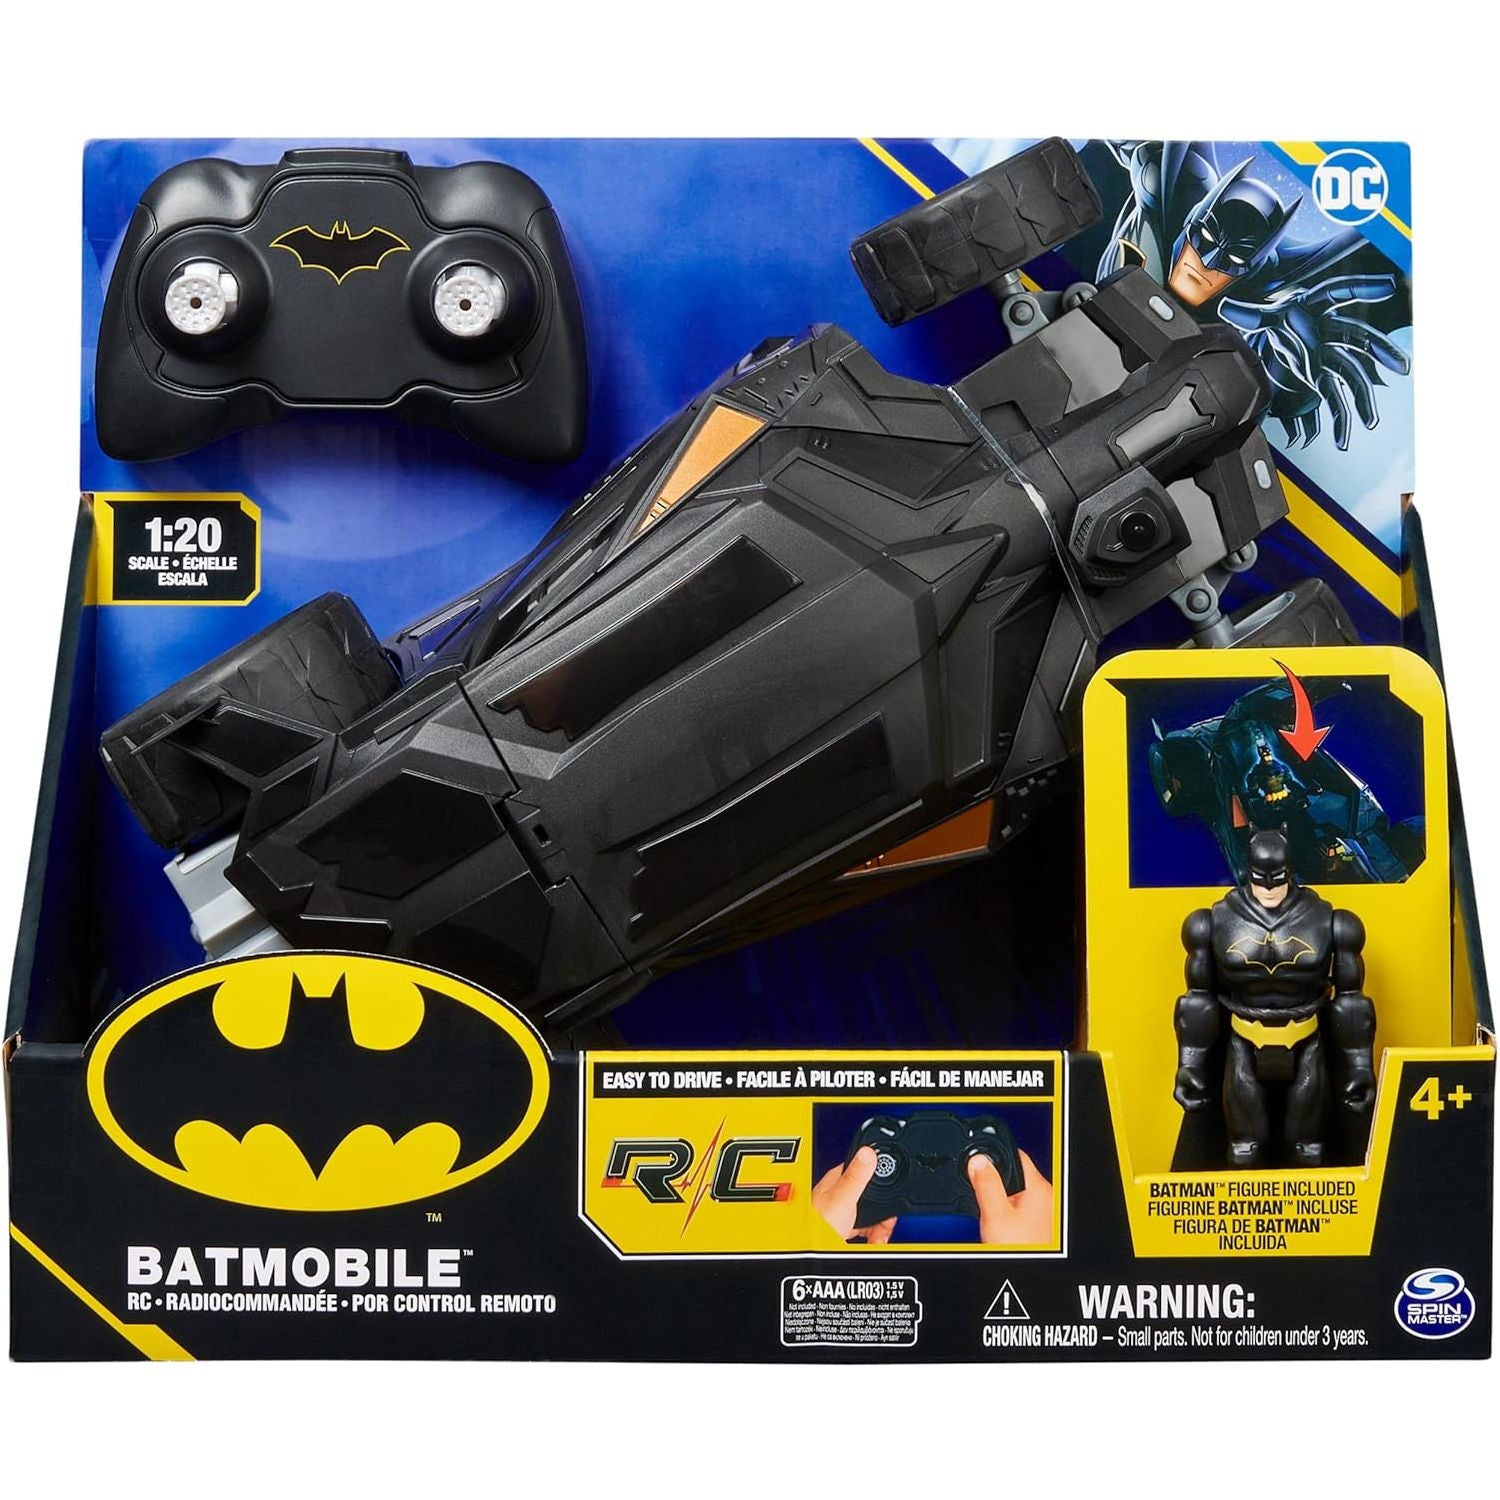 DC Comics Batman RC 1:20 Batmobile Vehicle With 4